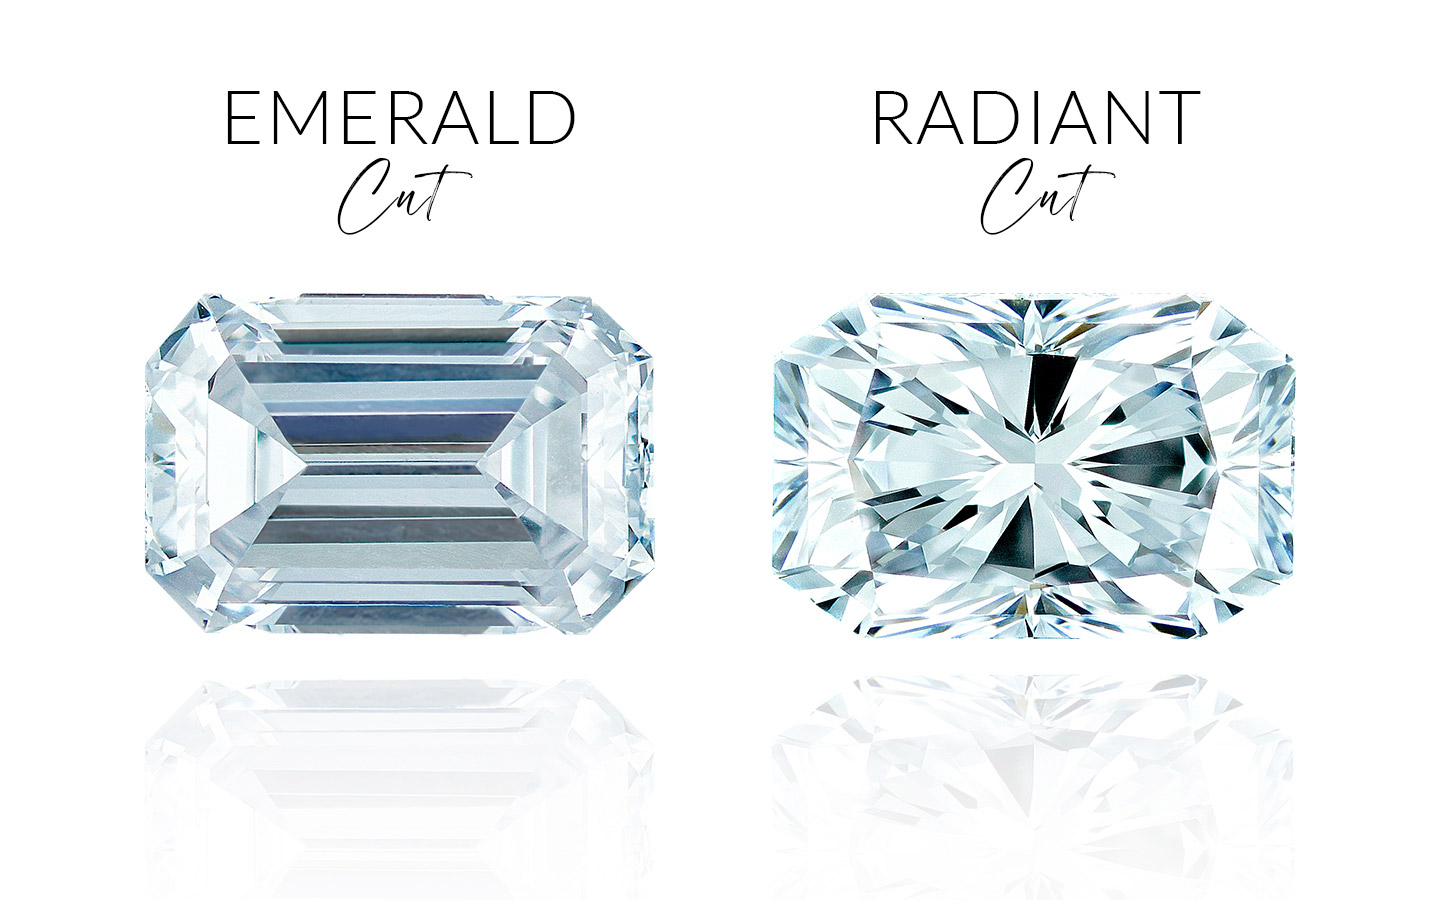 Emerald cut and radiant cut lab grown diamonds.